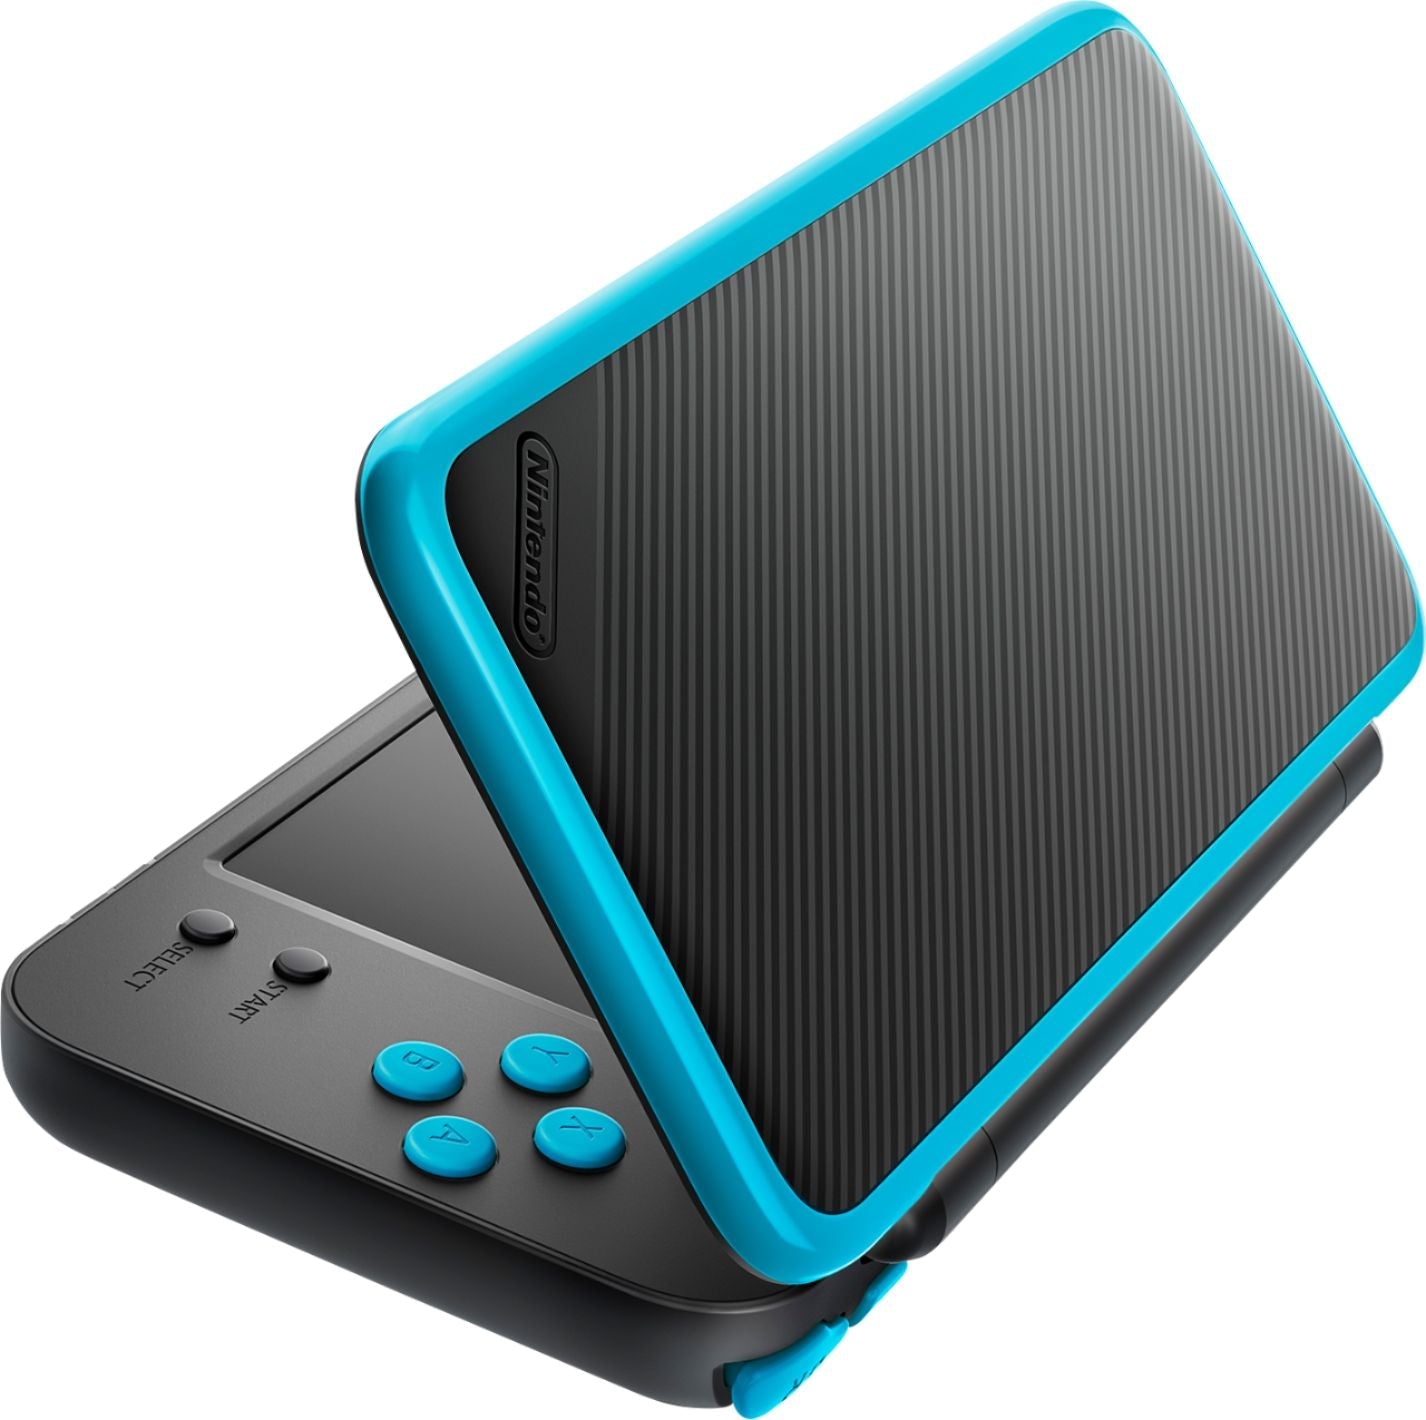 New Nintendo 2DS XL - Turquoise/Black